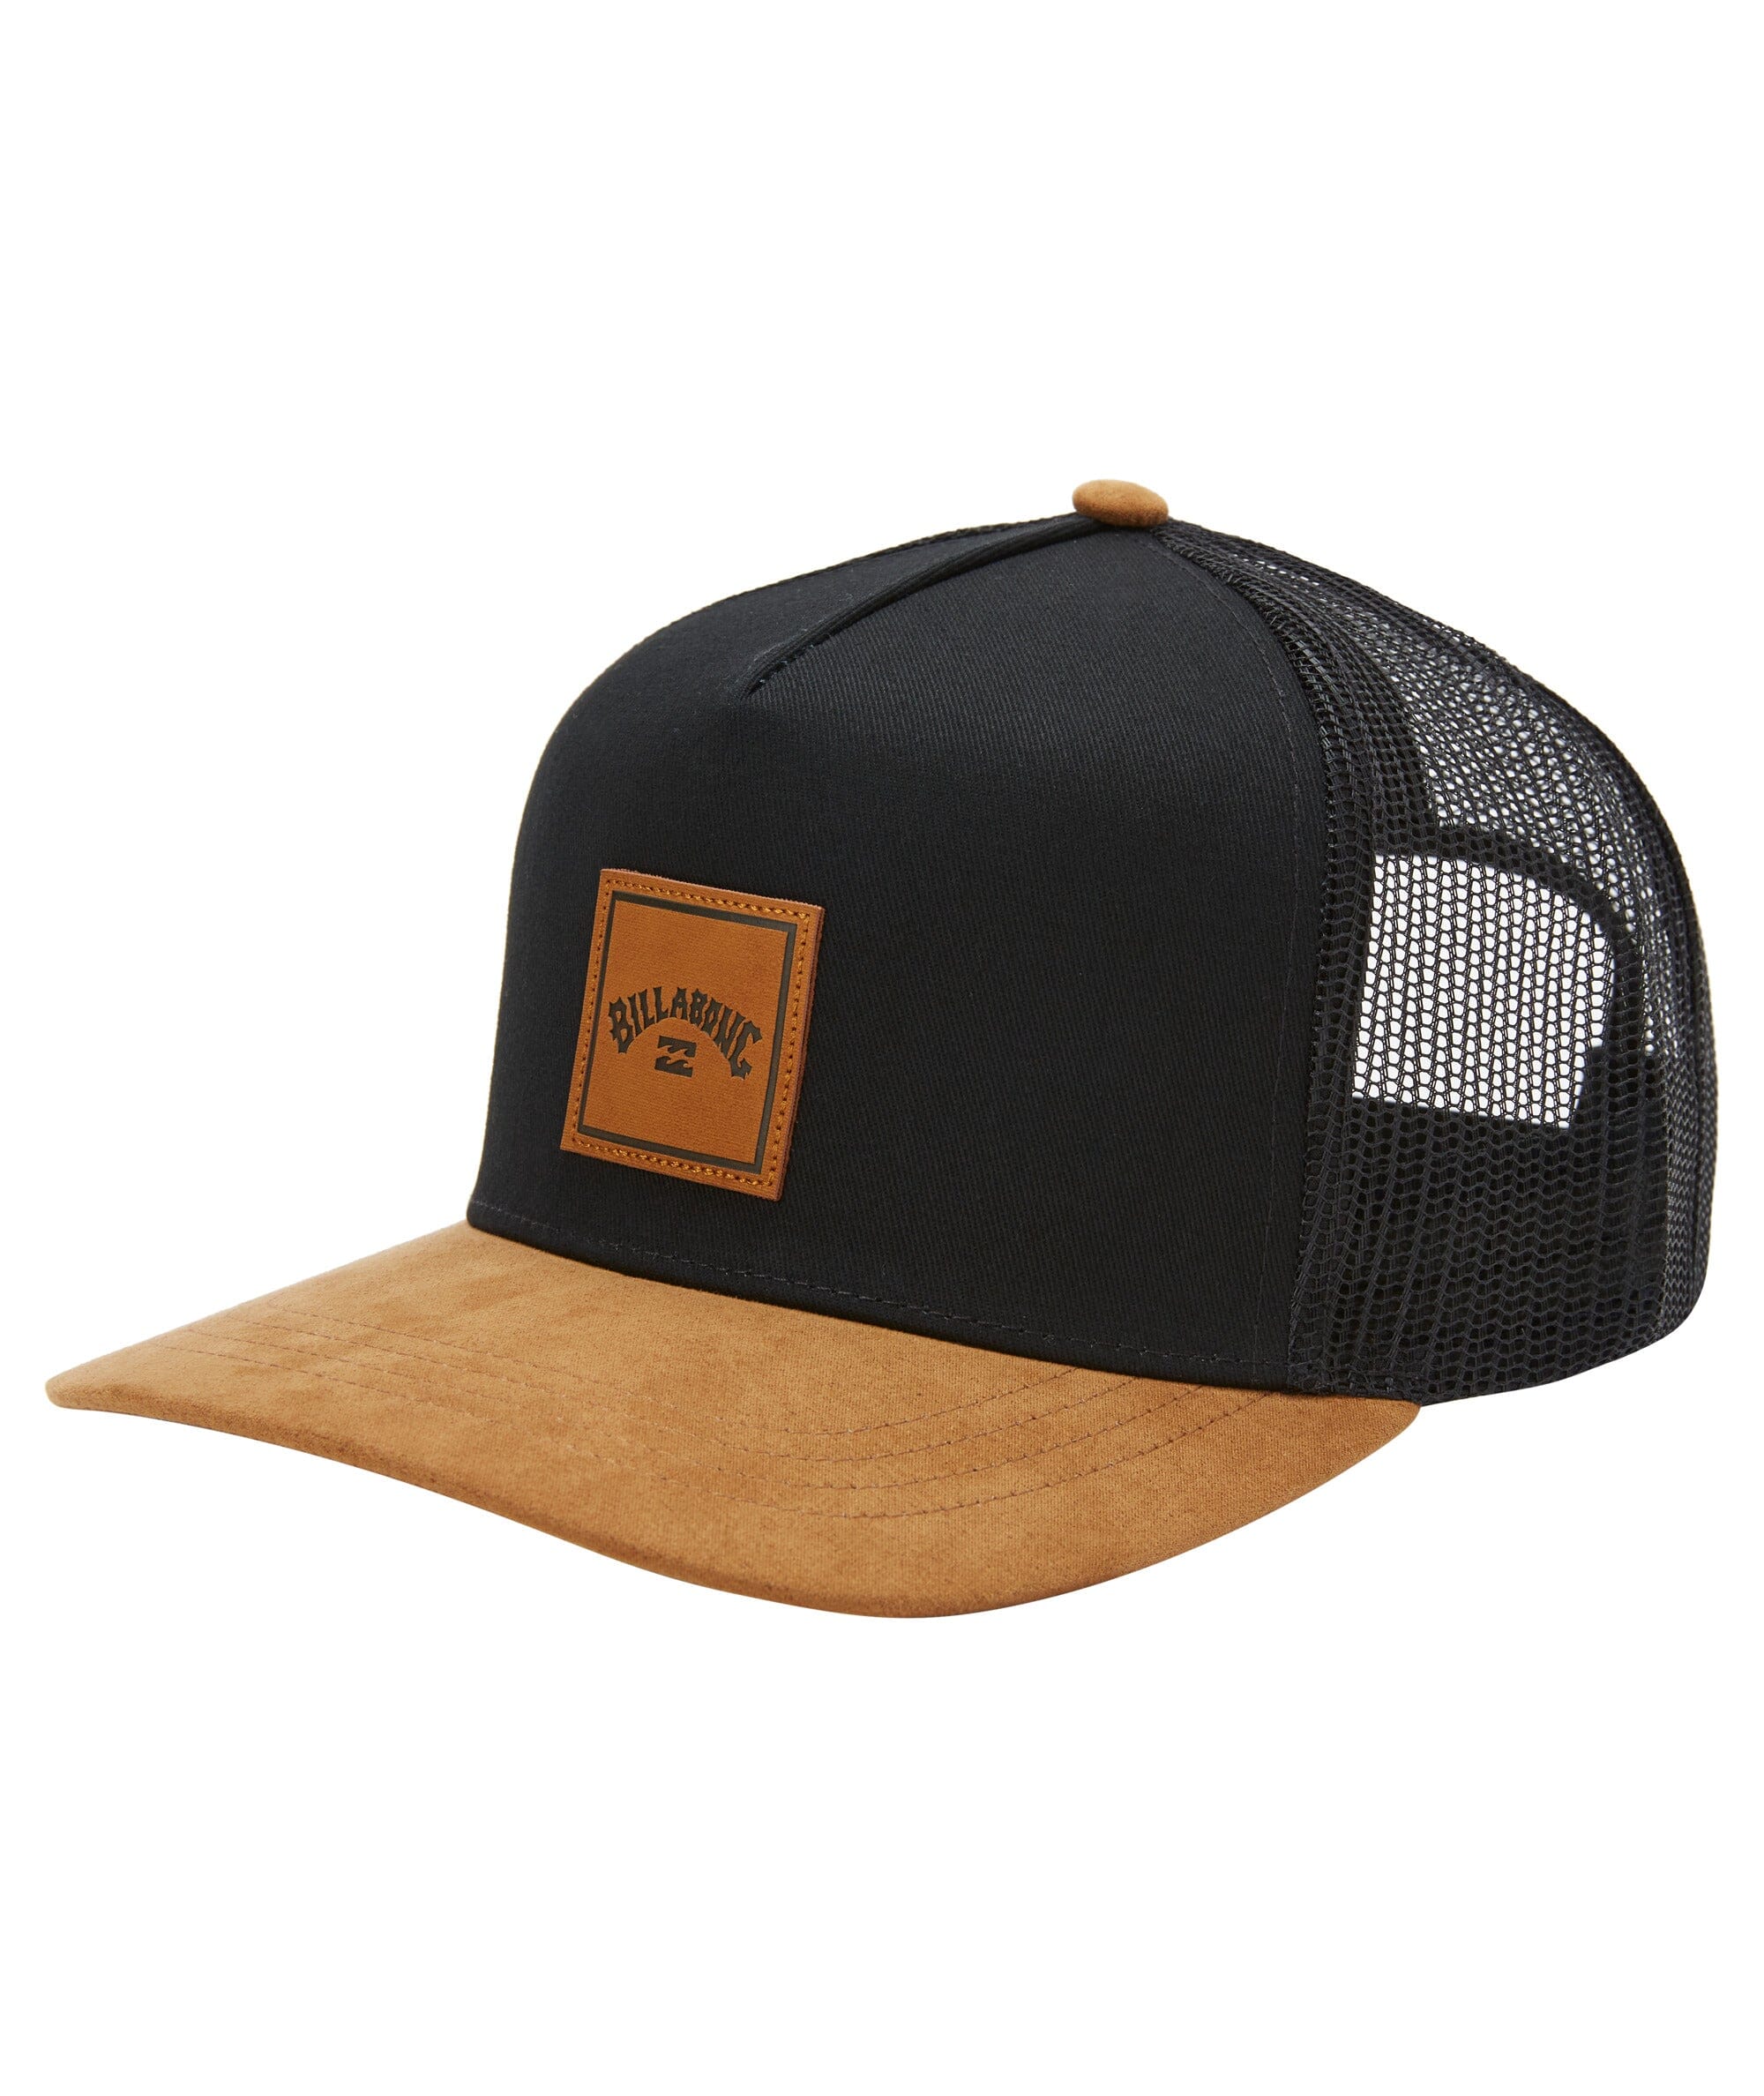 BILLABONG Stacked Trucker Hat Black/Tan Men's Hats Billabong 